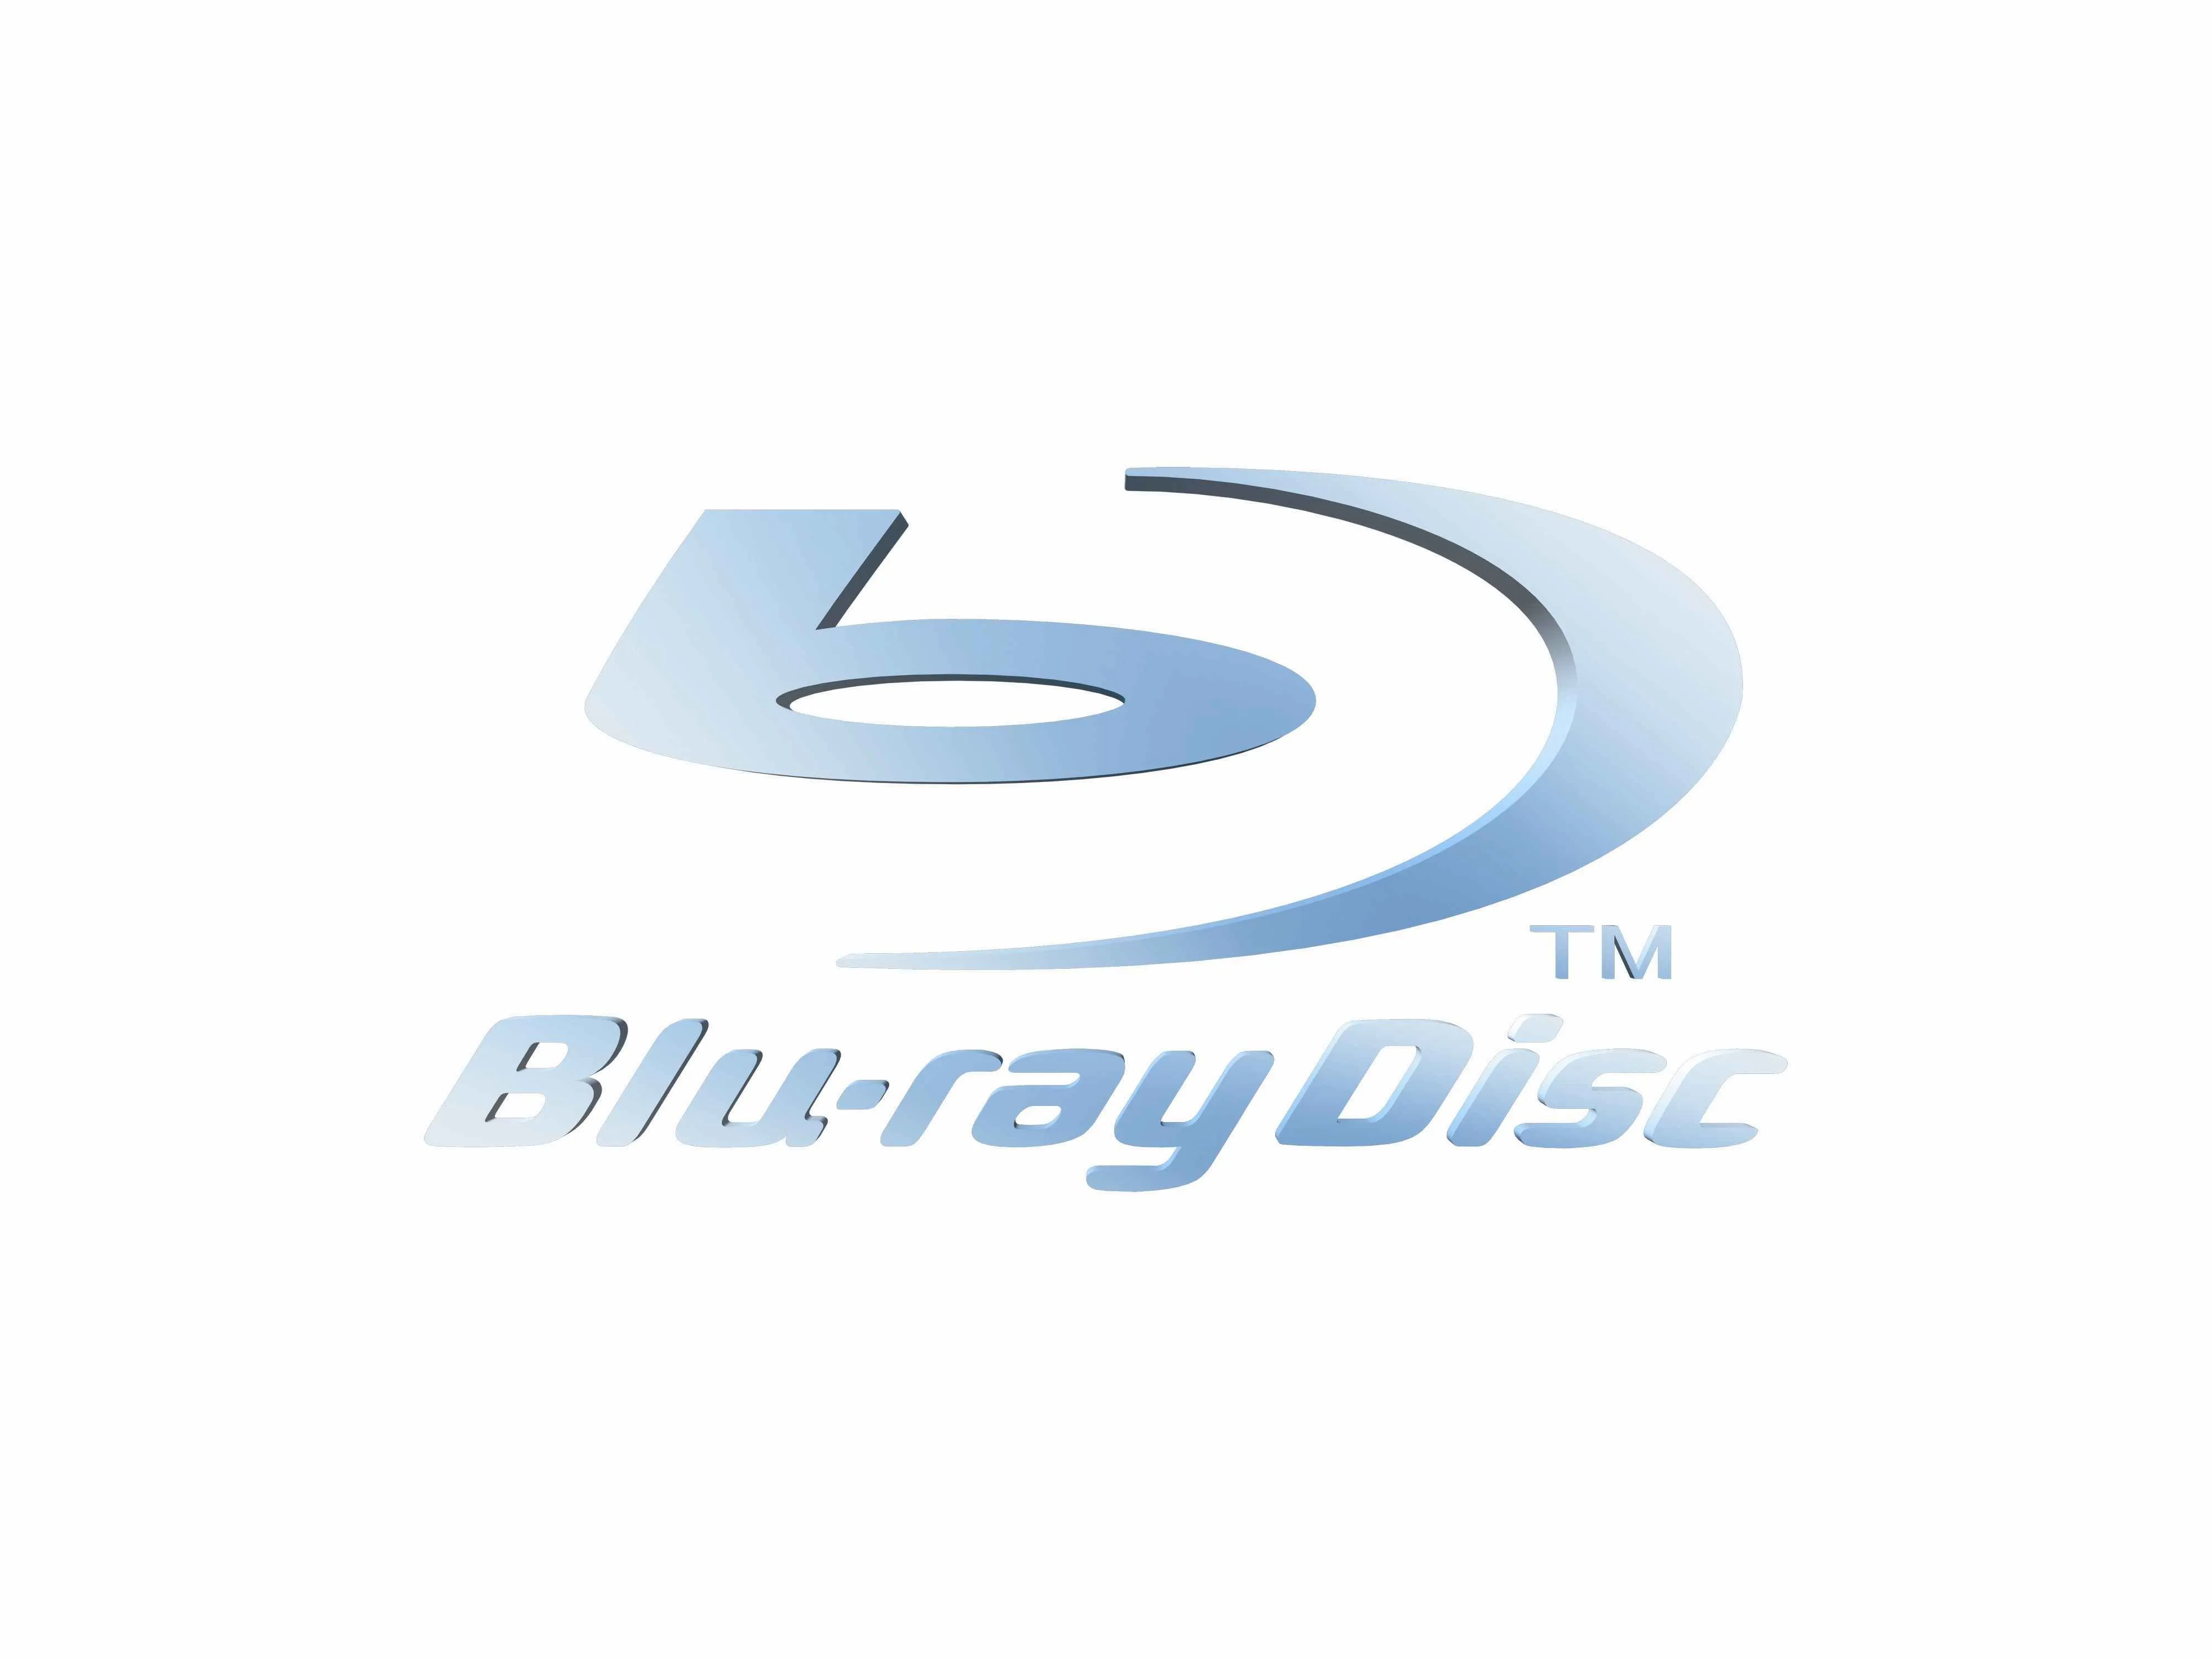 Logos For > Blu Ray Logo White